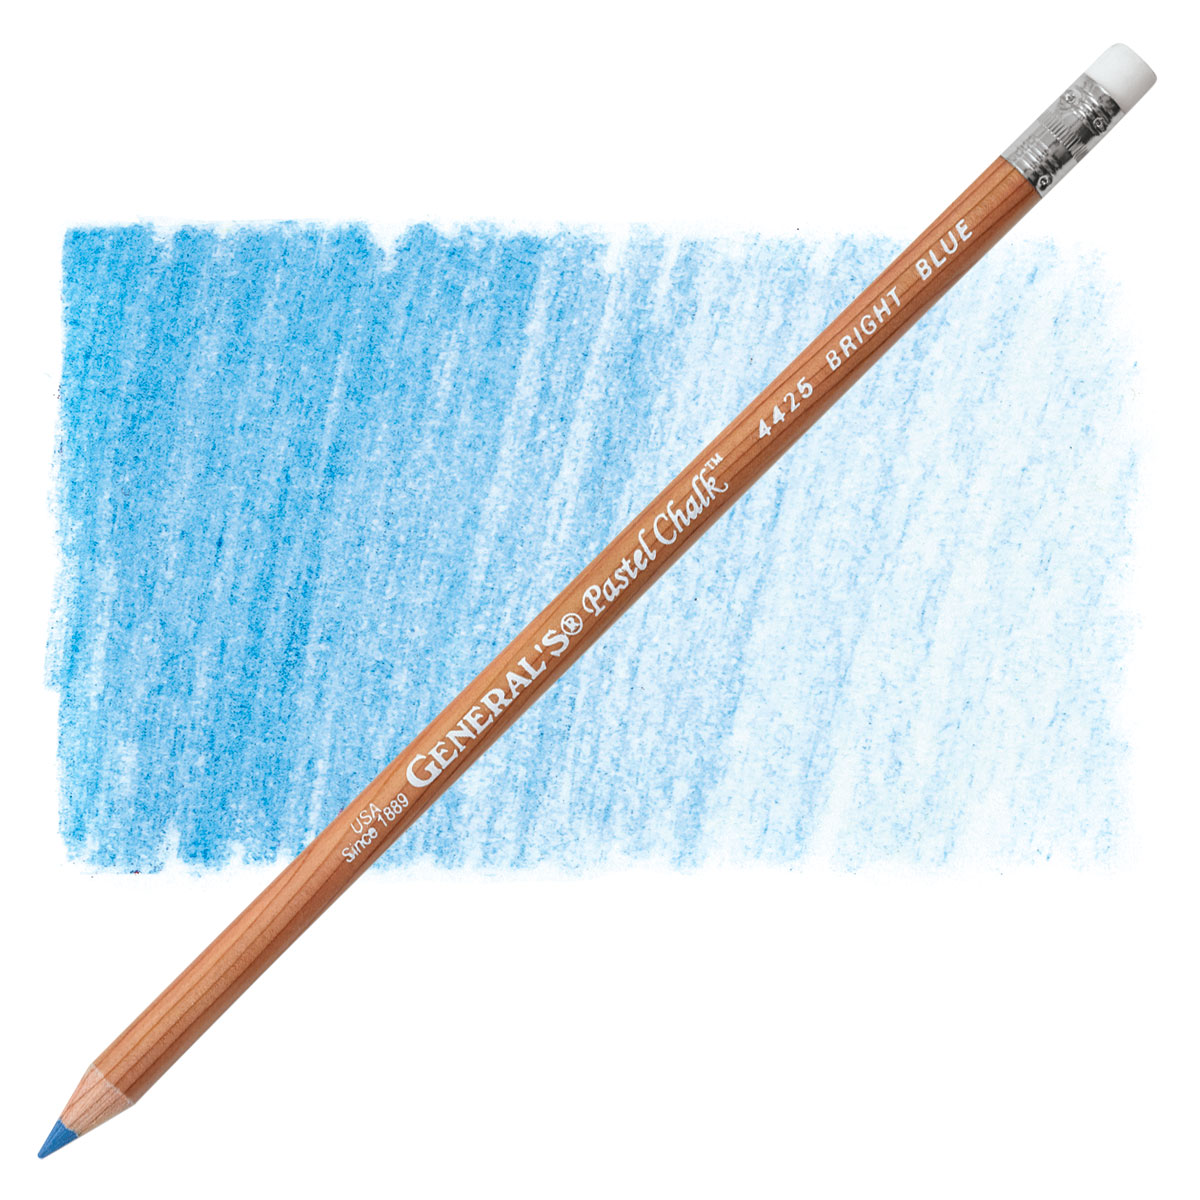 General's MultiPastel (R) Chalk Pencils 36/Pkg-Assorted Colors, 1 count -  Kroger